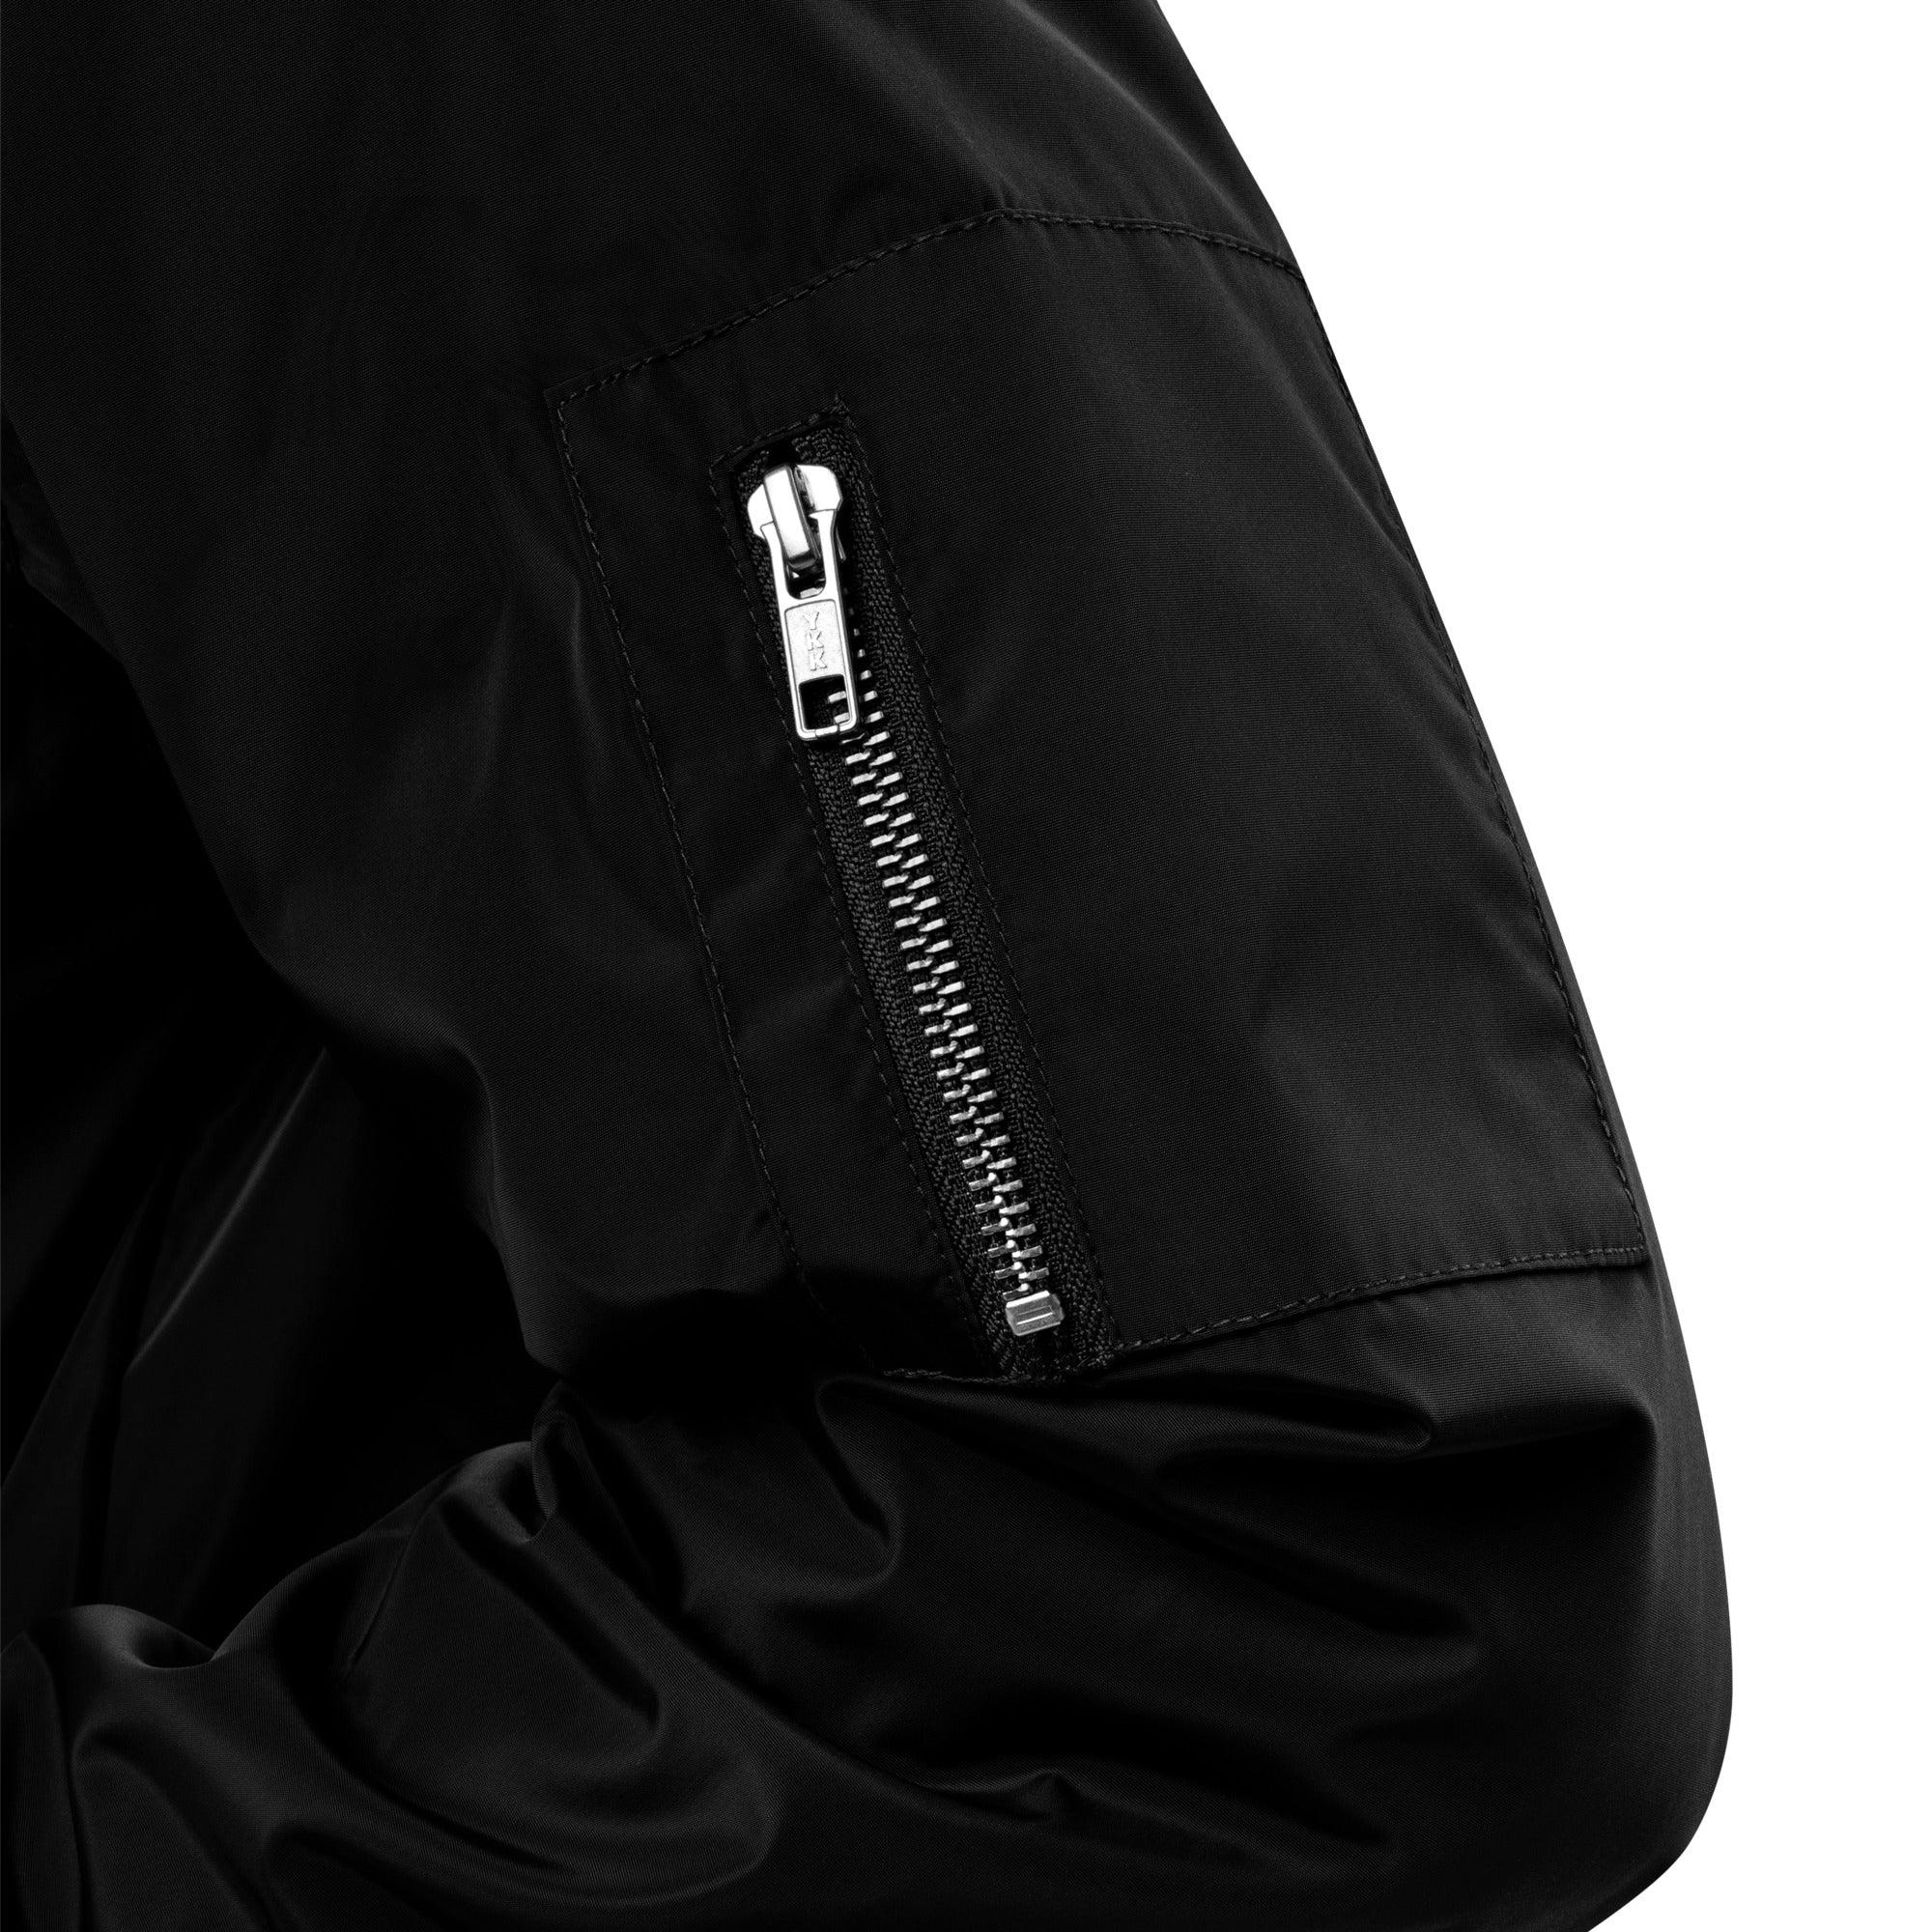 GEARTA - High-quality eco-friendly bomber jacket